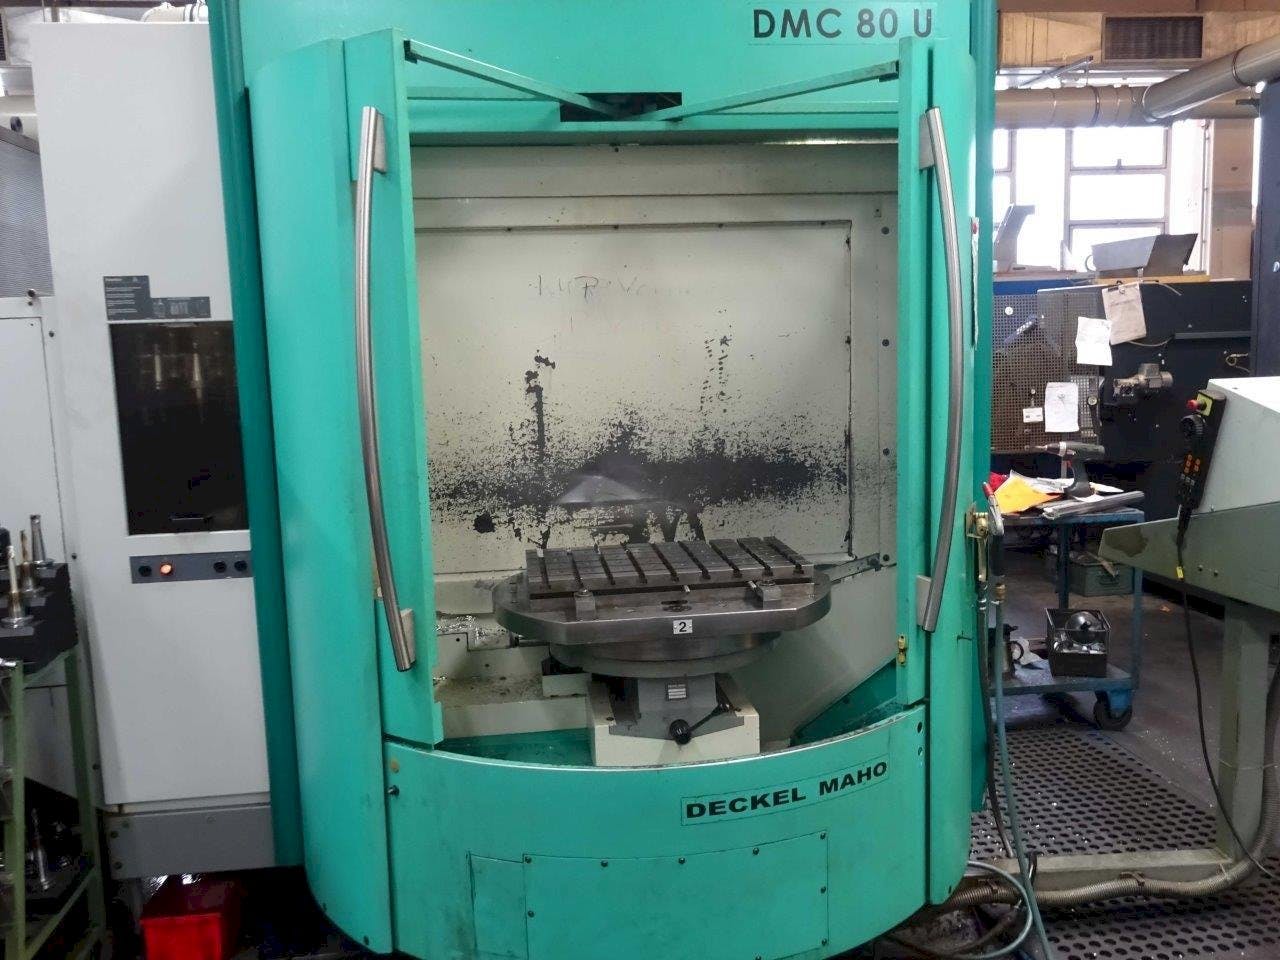 Front view of DECKEL Maho DMC 80 U  machine